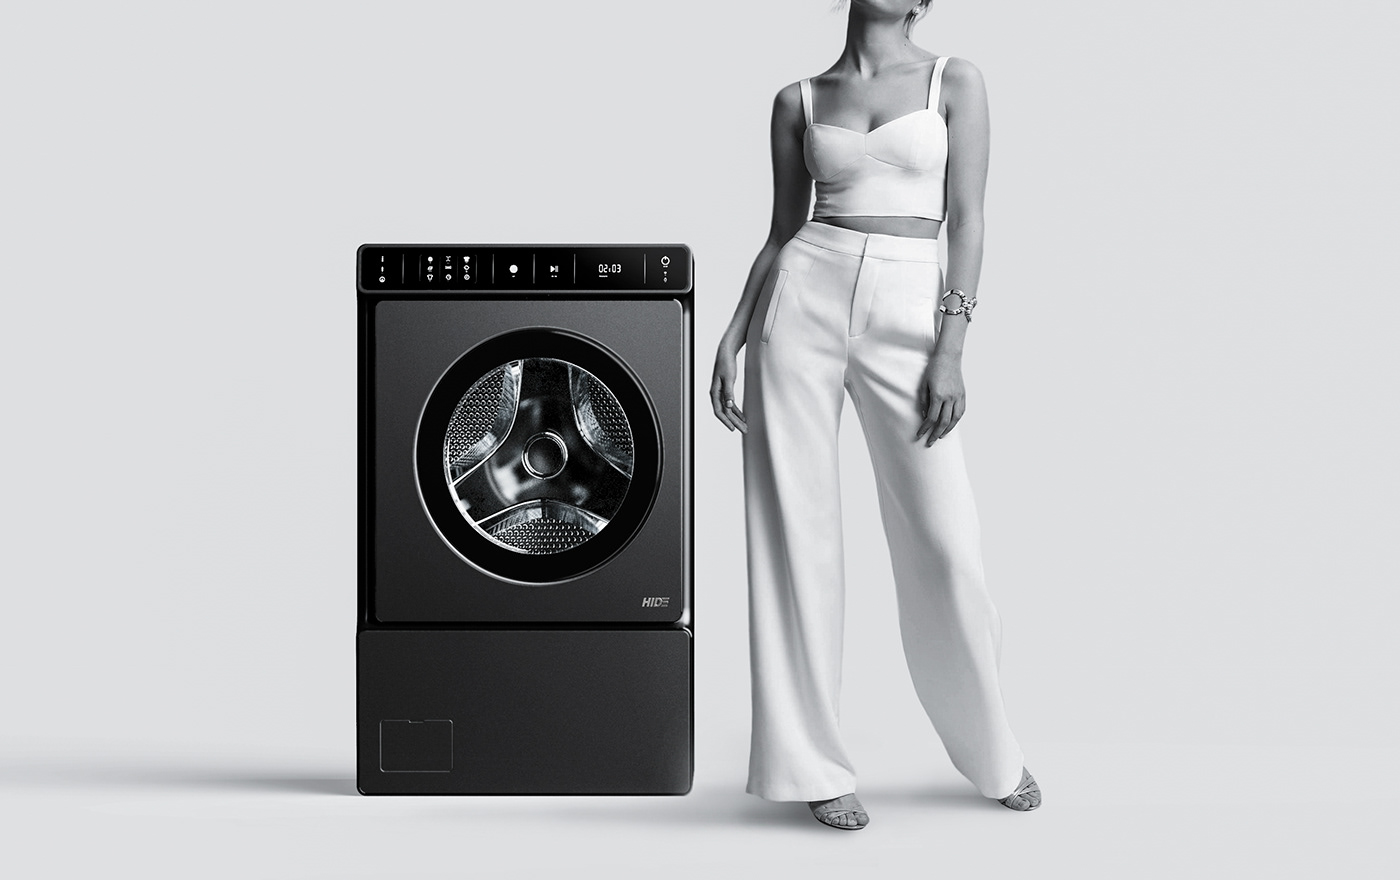 black compact detail hide Interior push washer Washing machine